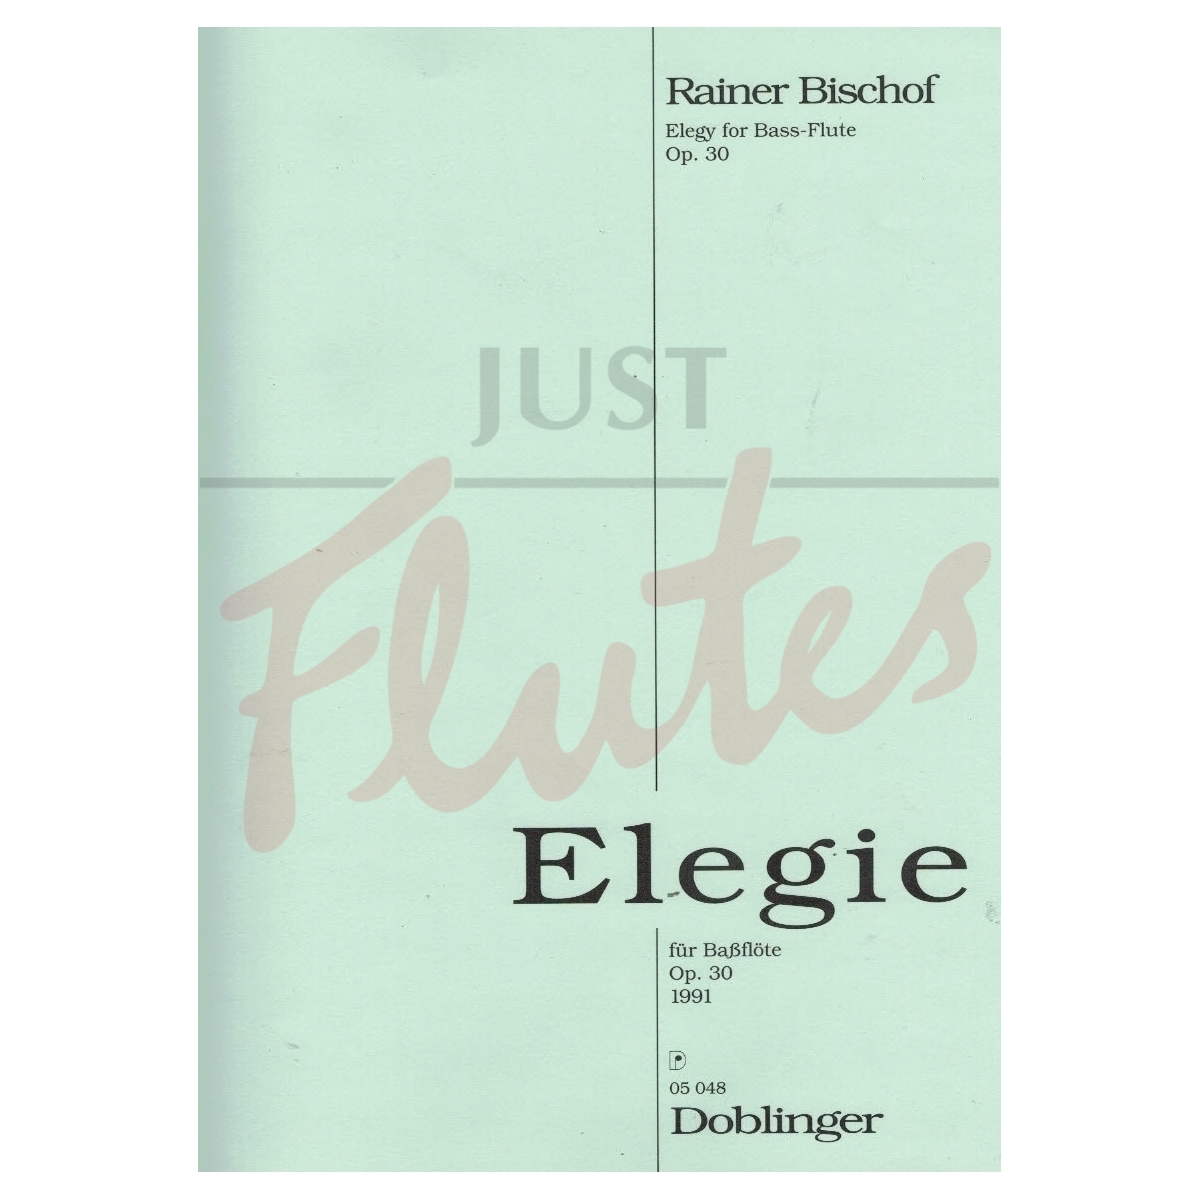 Elegie for solo bass flute